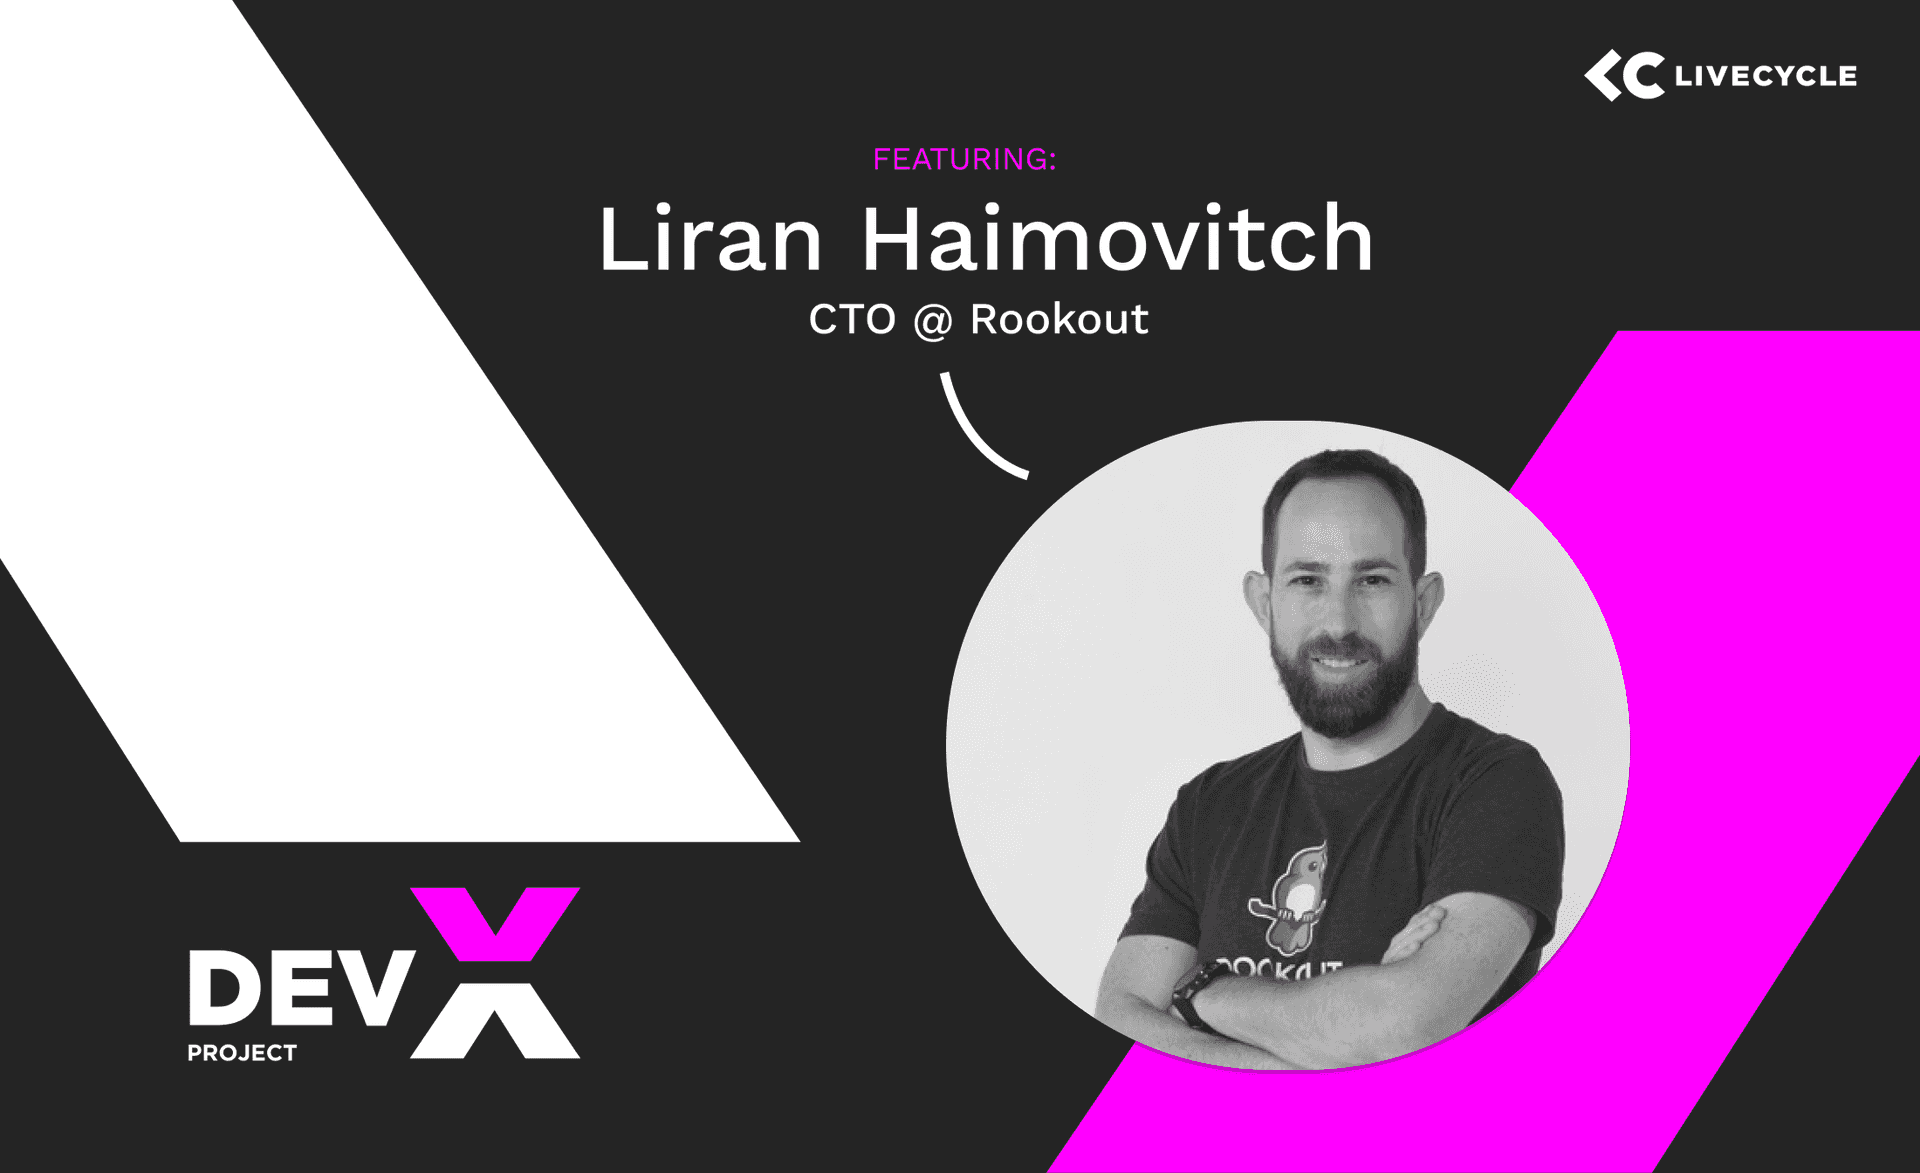 The Dev-X Project: Featuring Liran Haimovitch